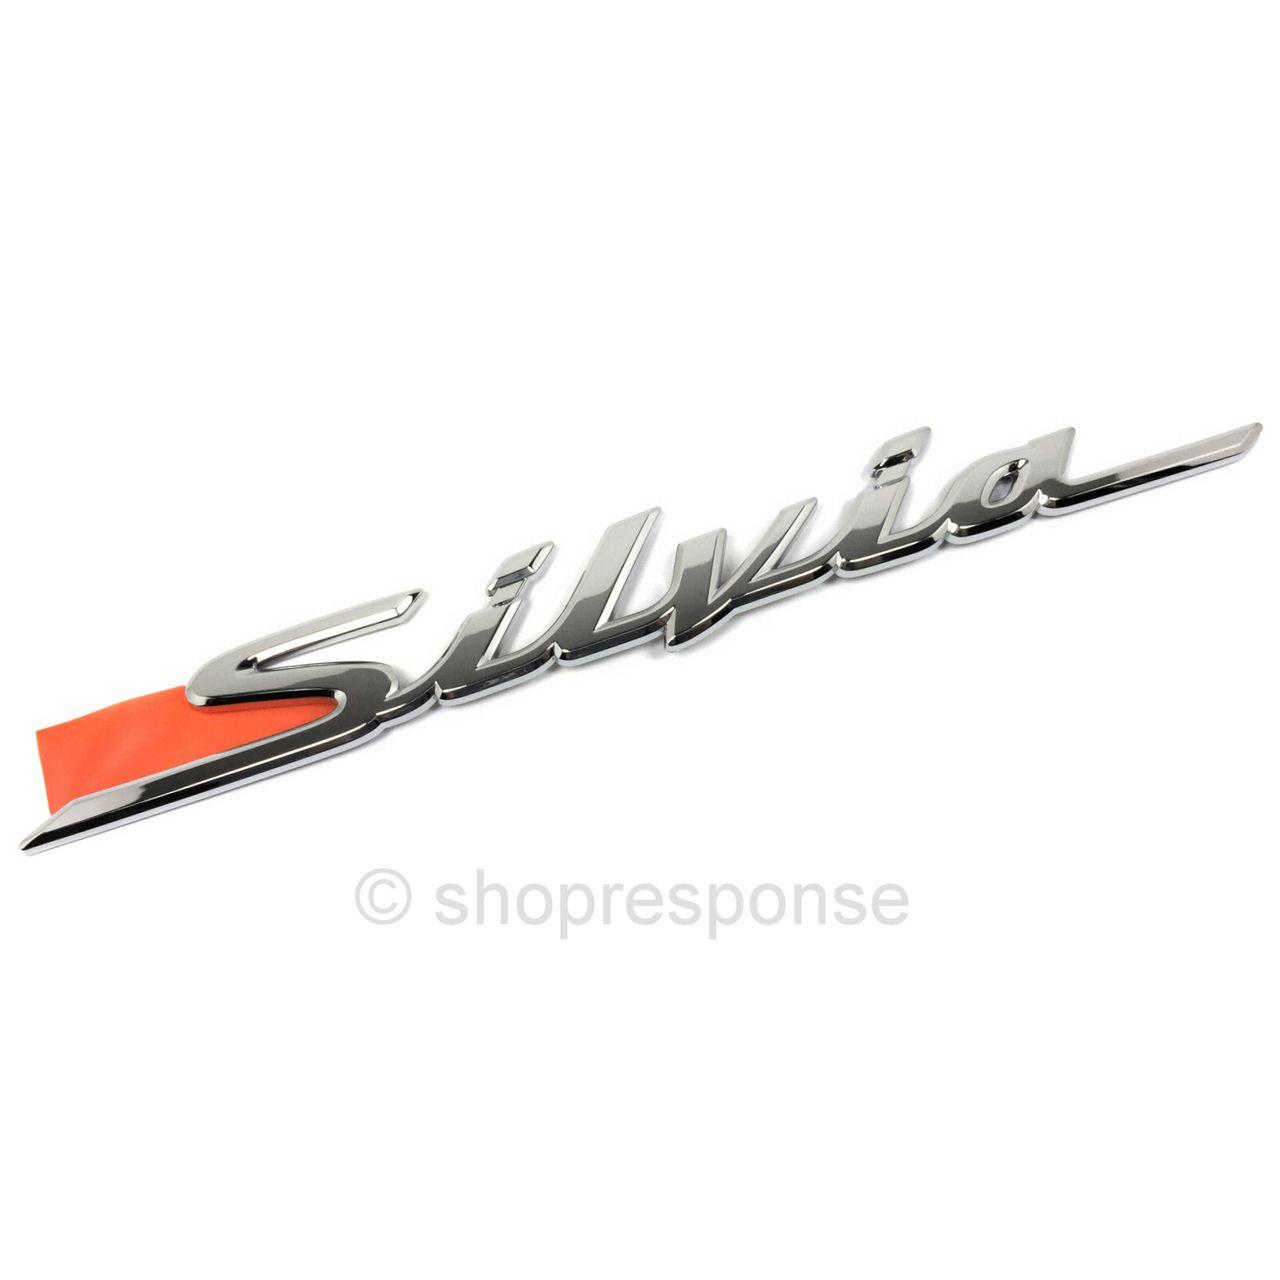 Silvia Logo - JDM Nissan Silvia S15 Silvia Emblem (Chrome) Import